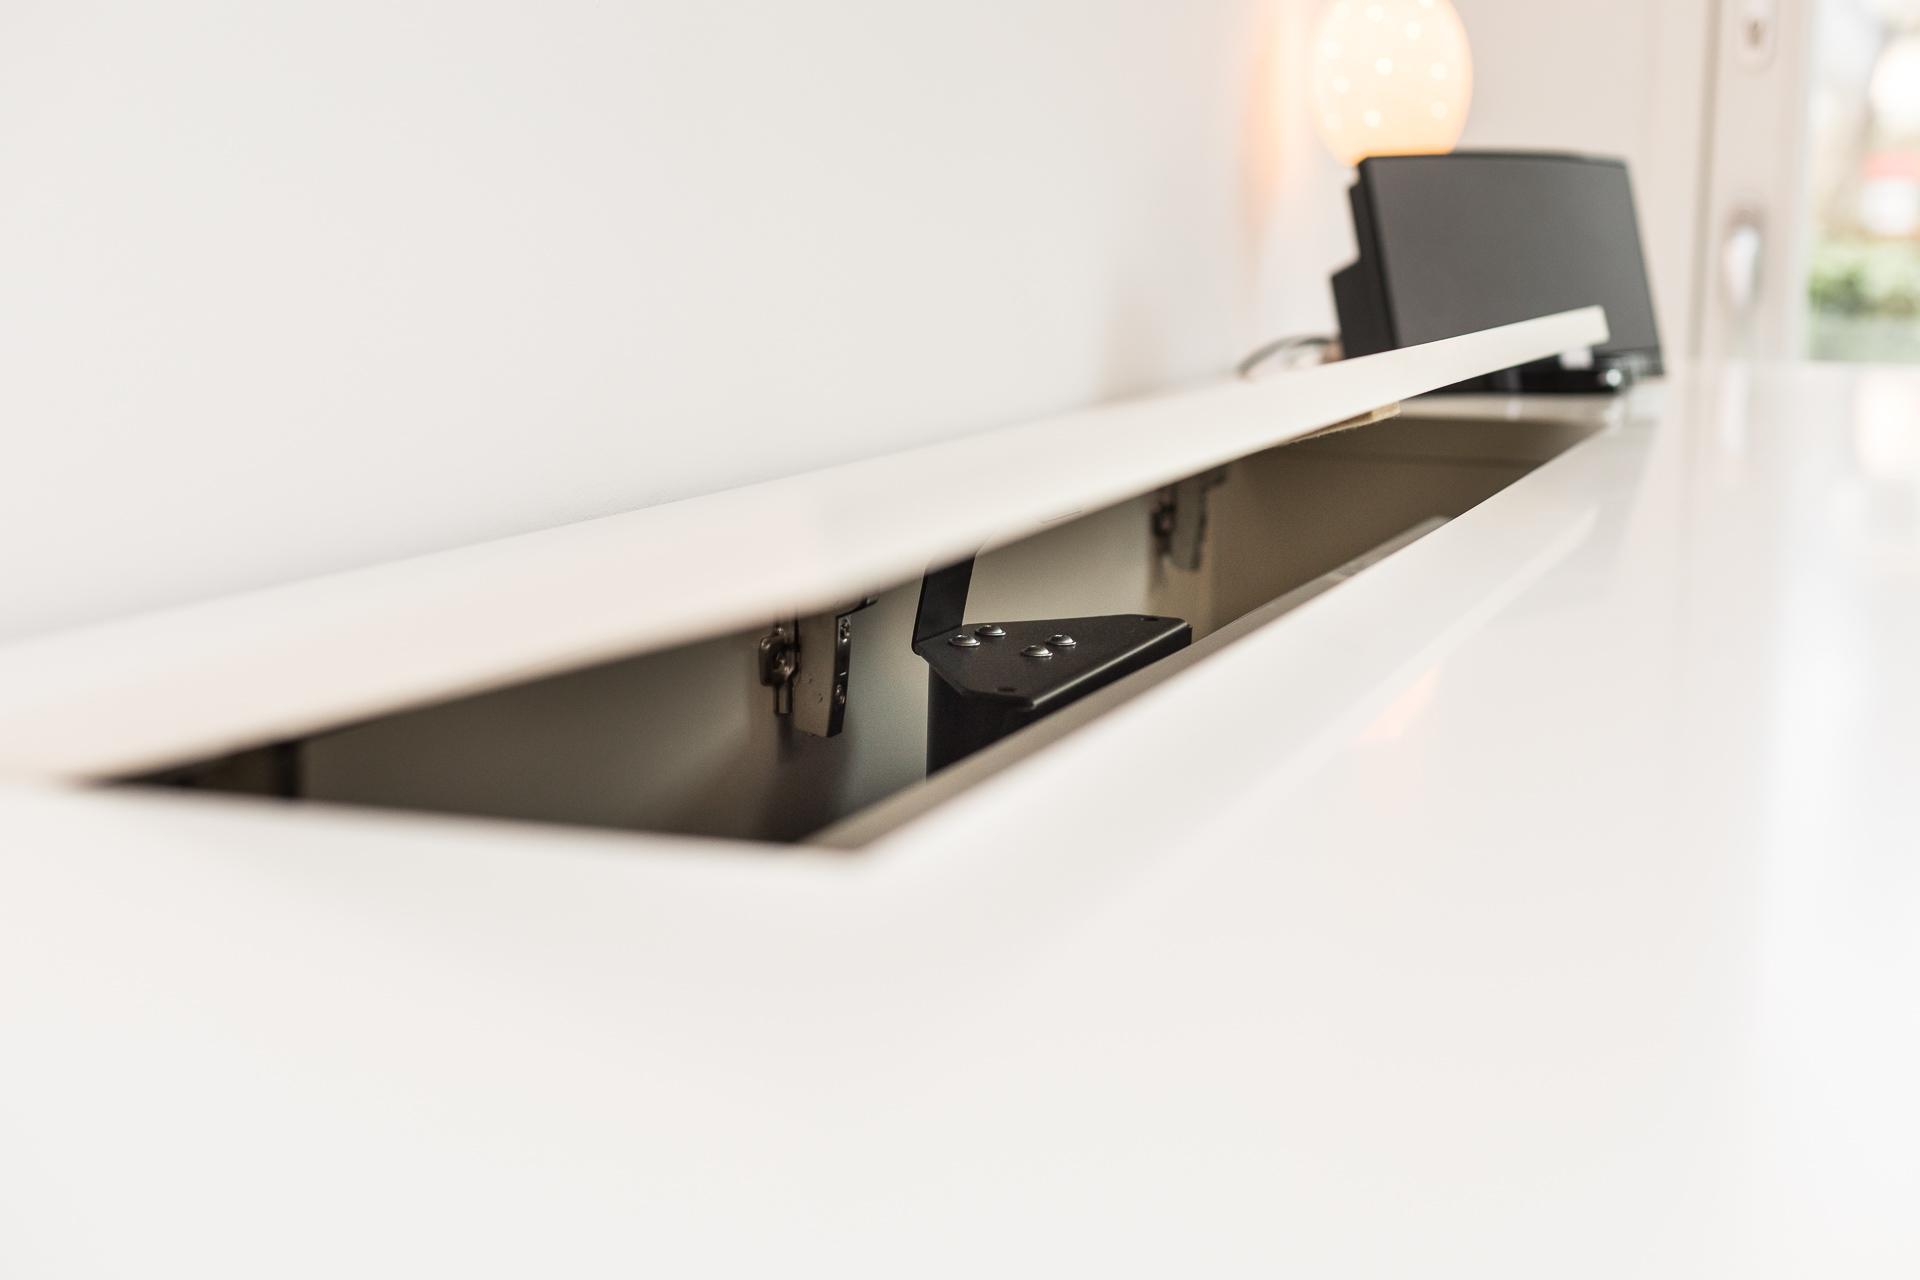 Lackierte Kommode mit integriertem TV-Lift #wohnzimmer #kommode #sideboard #tvboard ©Pickawood GmbH